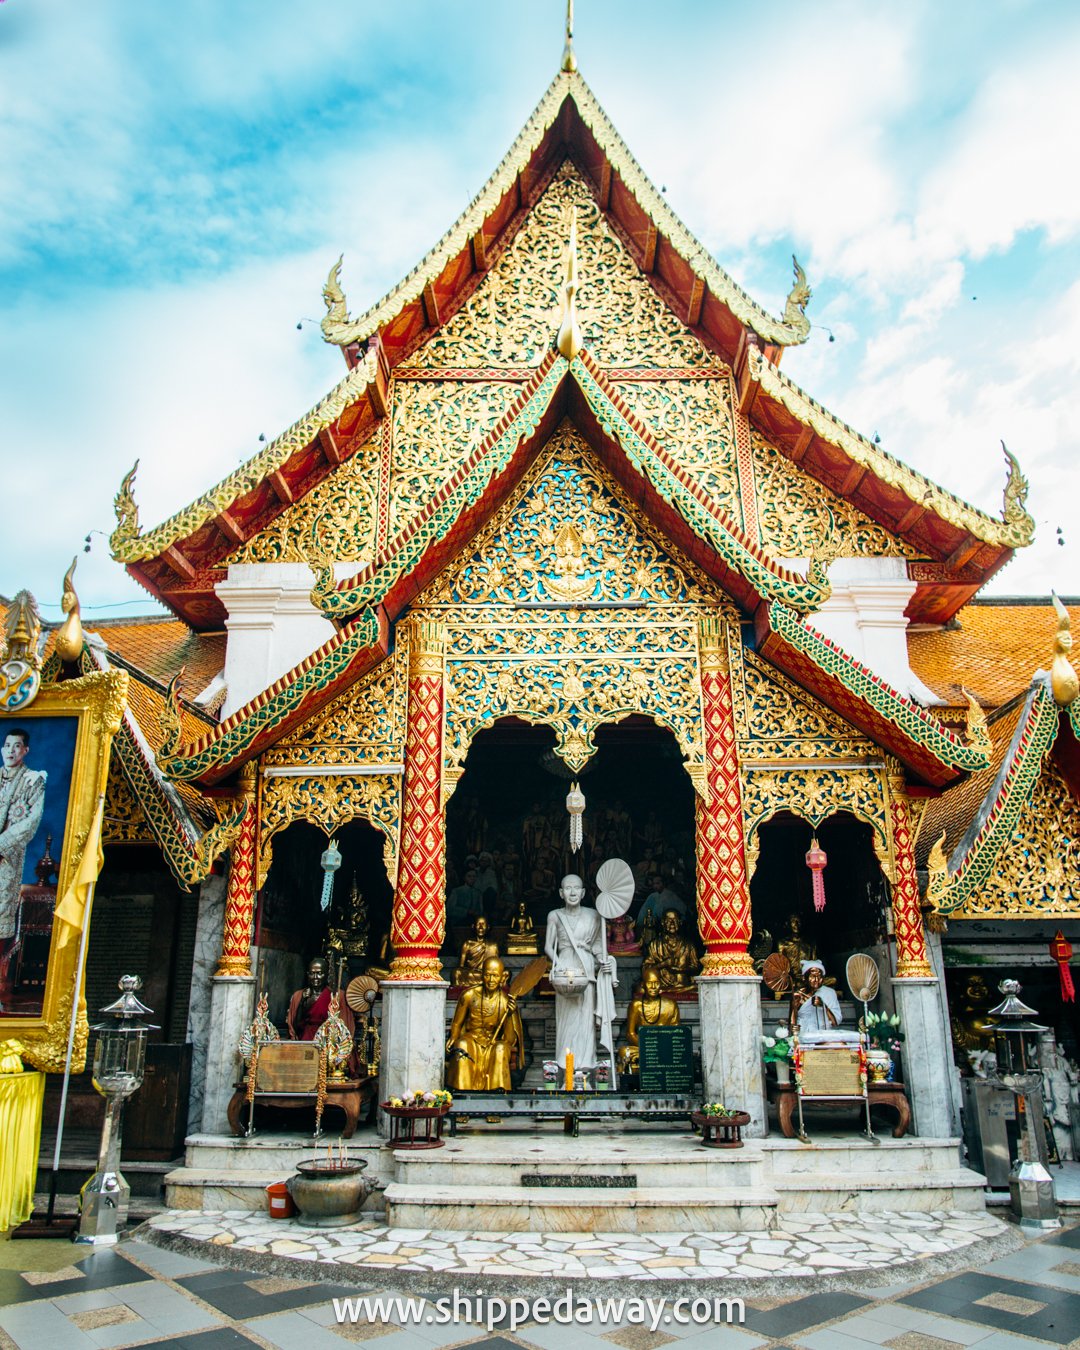 Pagodas and shrines of Wat Phra That Doi Suthep - Doi Suthep Temple Chiang Mai, Thailand - Travel Guide to Doi Suthep Temple